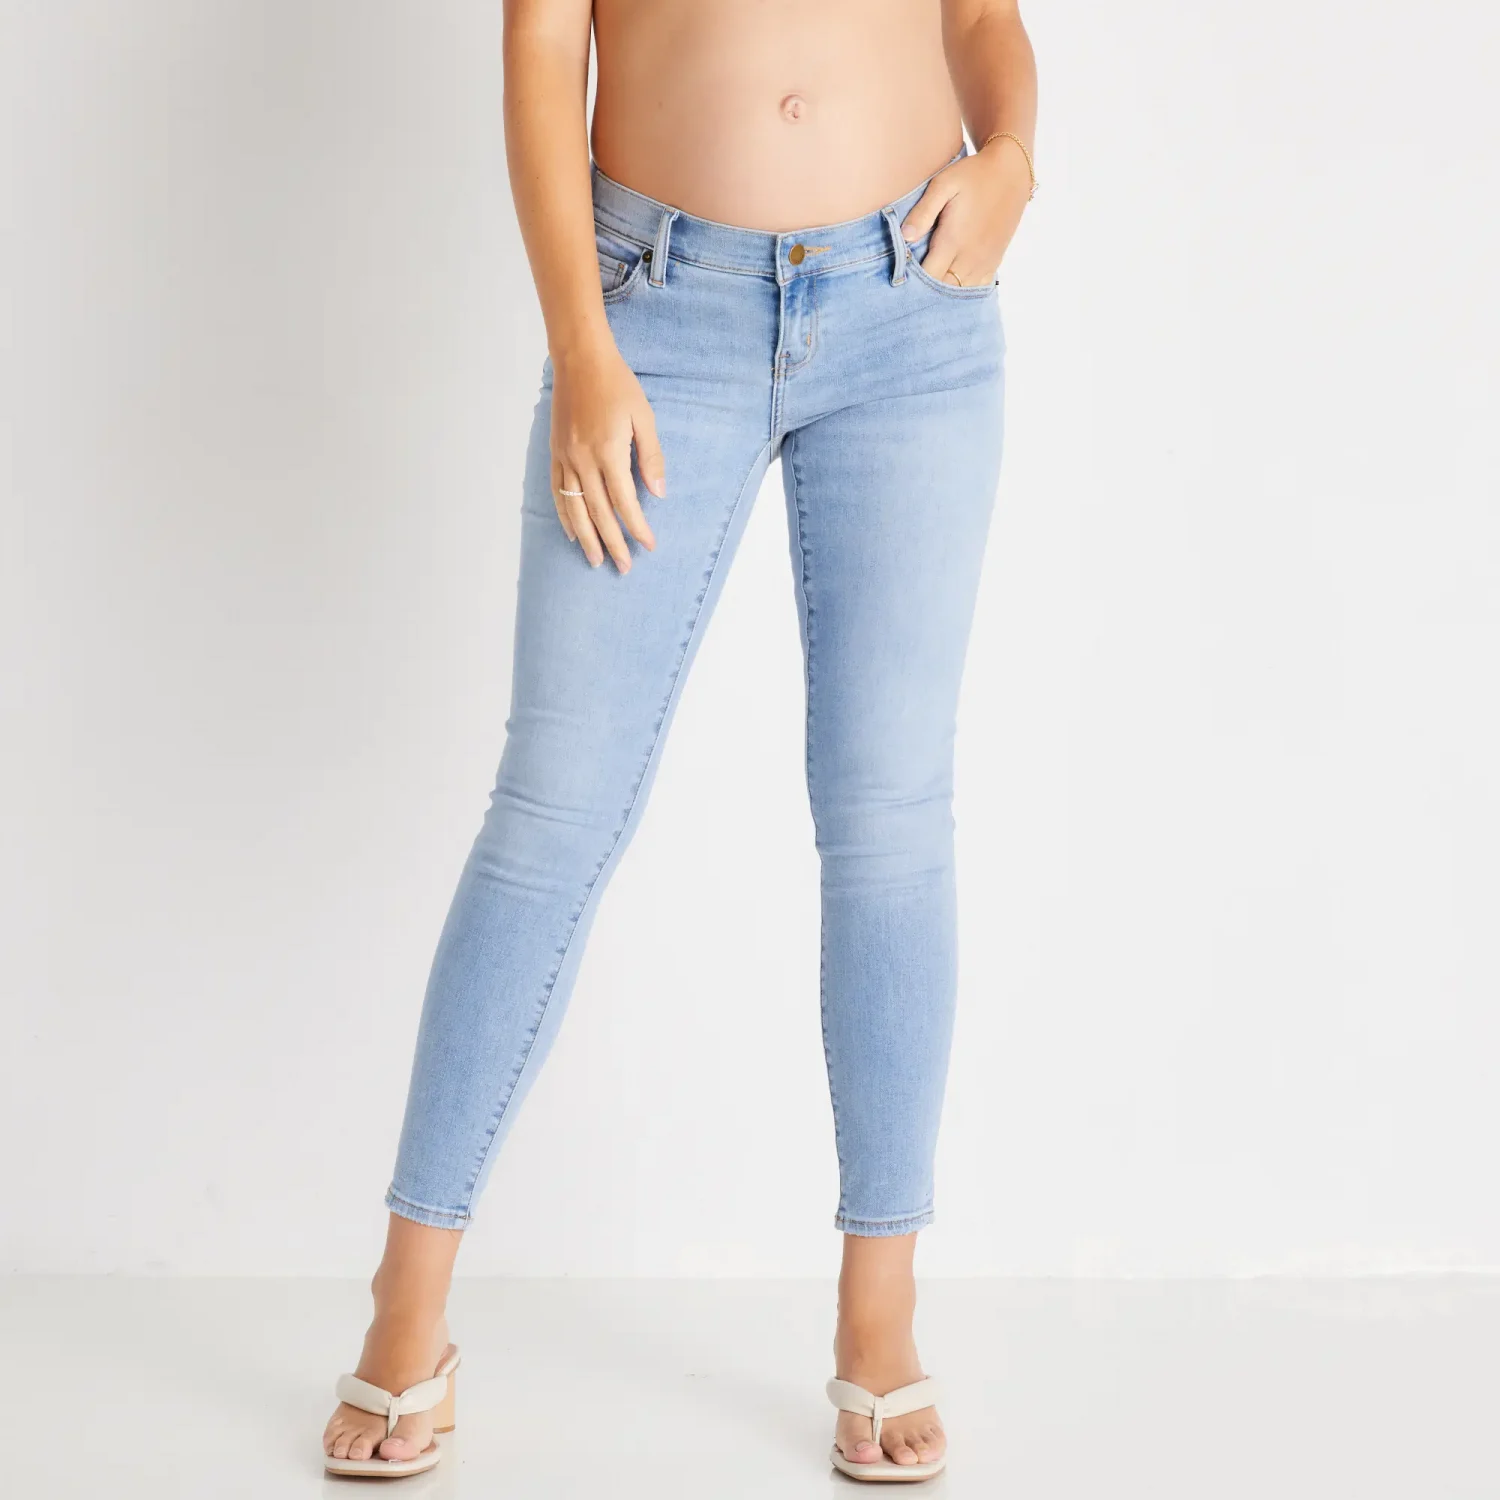 Hatch brand stylish maternity slim fit jeans